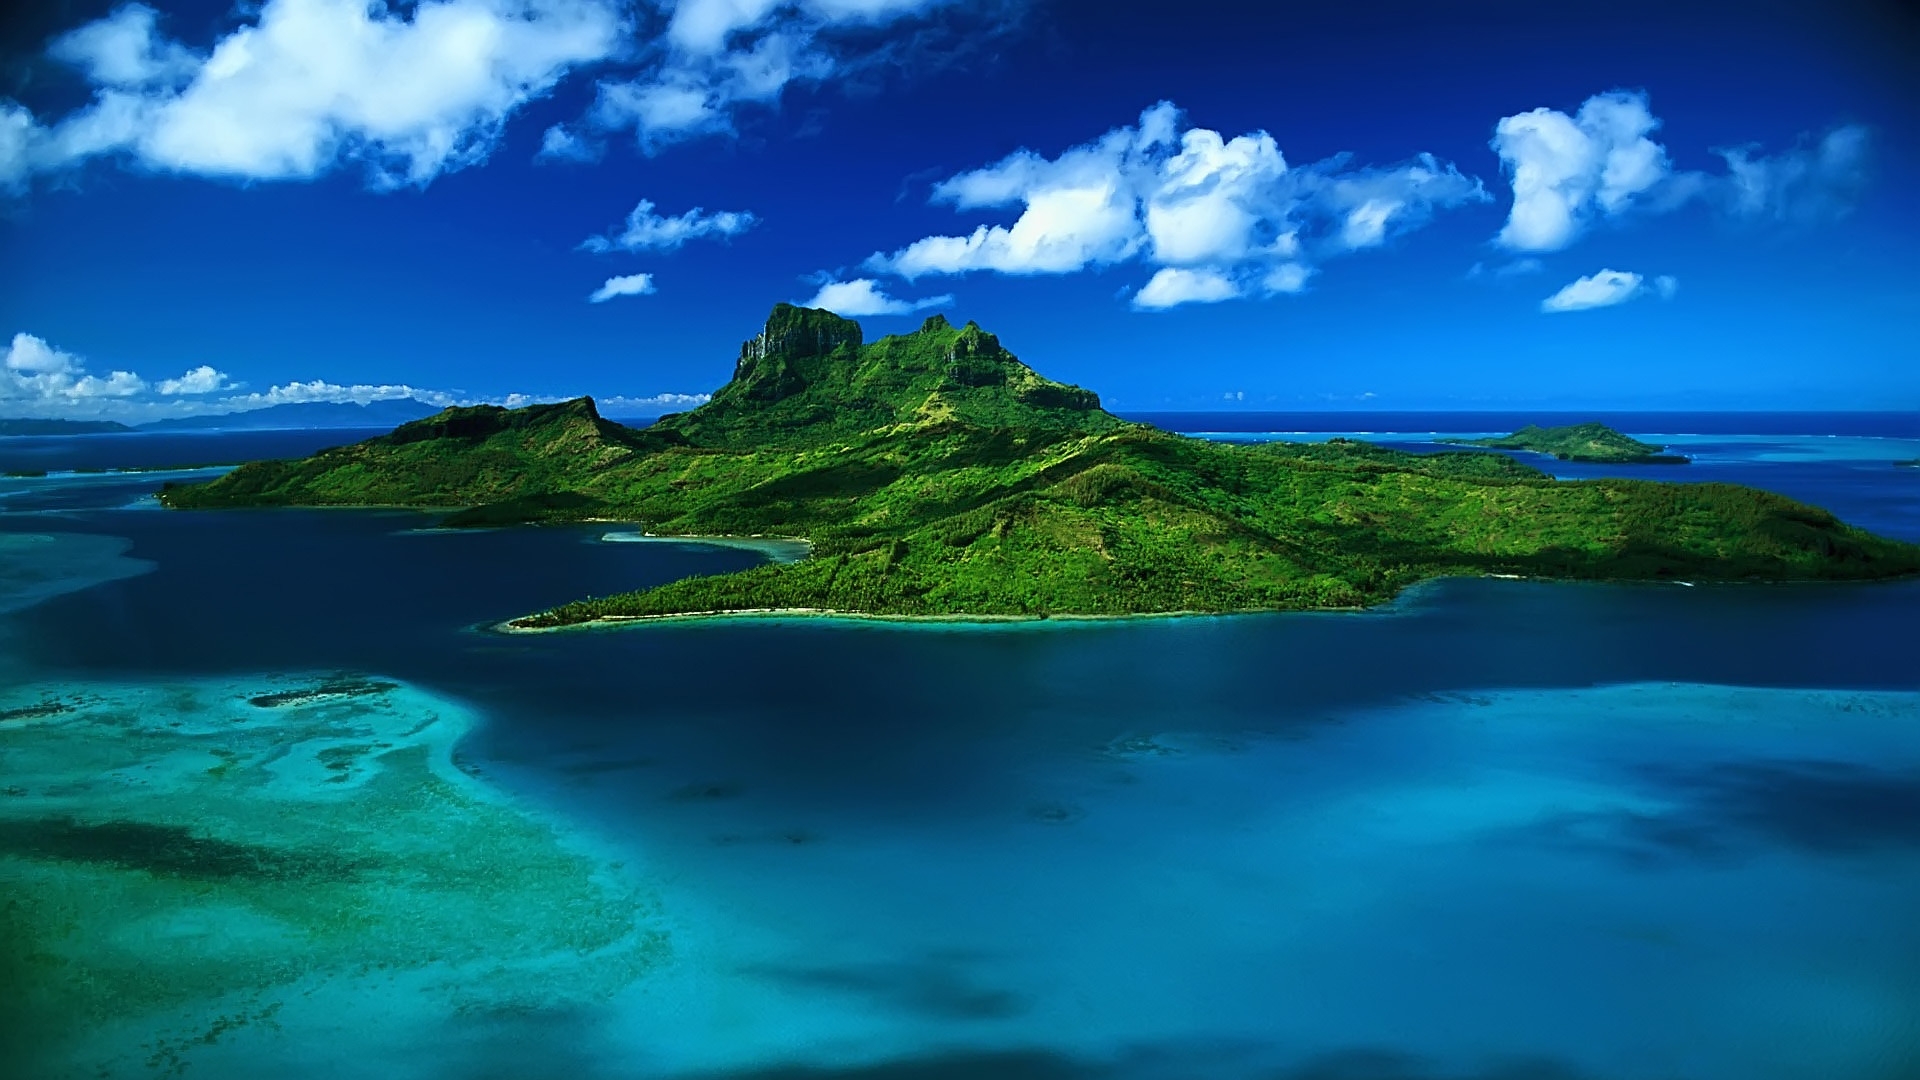 Beautiful Green Island for 1920 x 1080 HDTV 1080p resolution